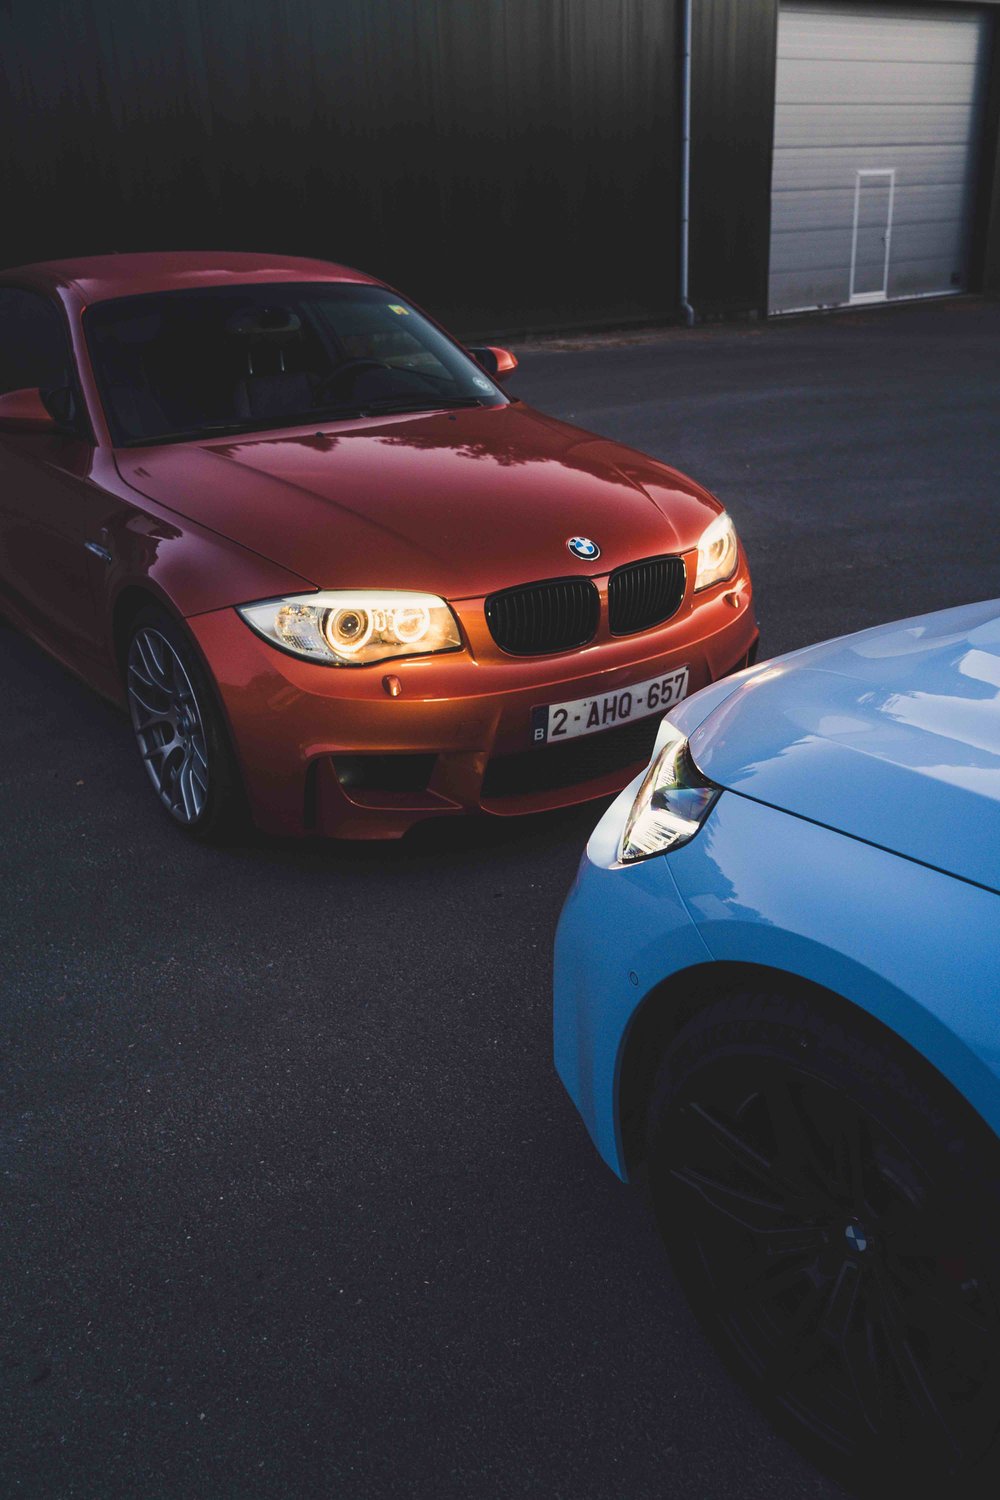 BMW 1M front, M2